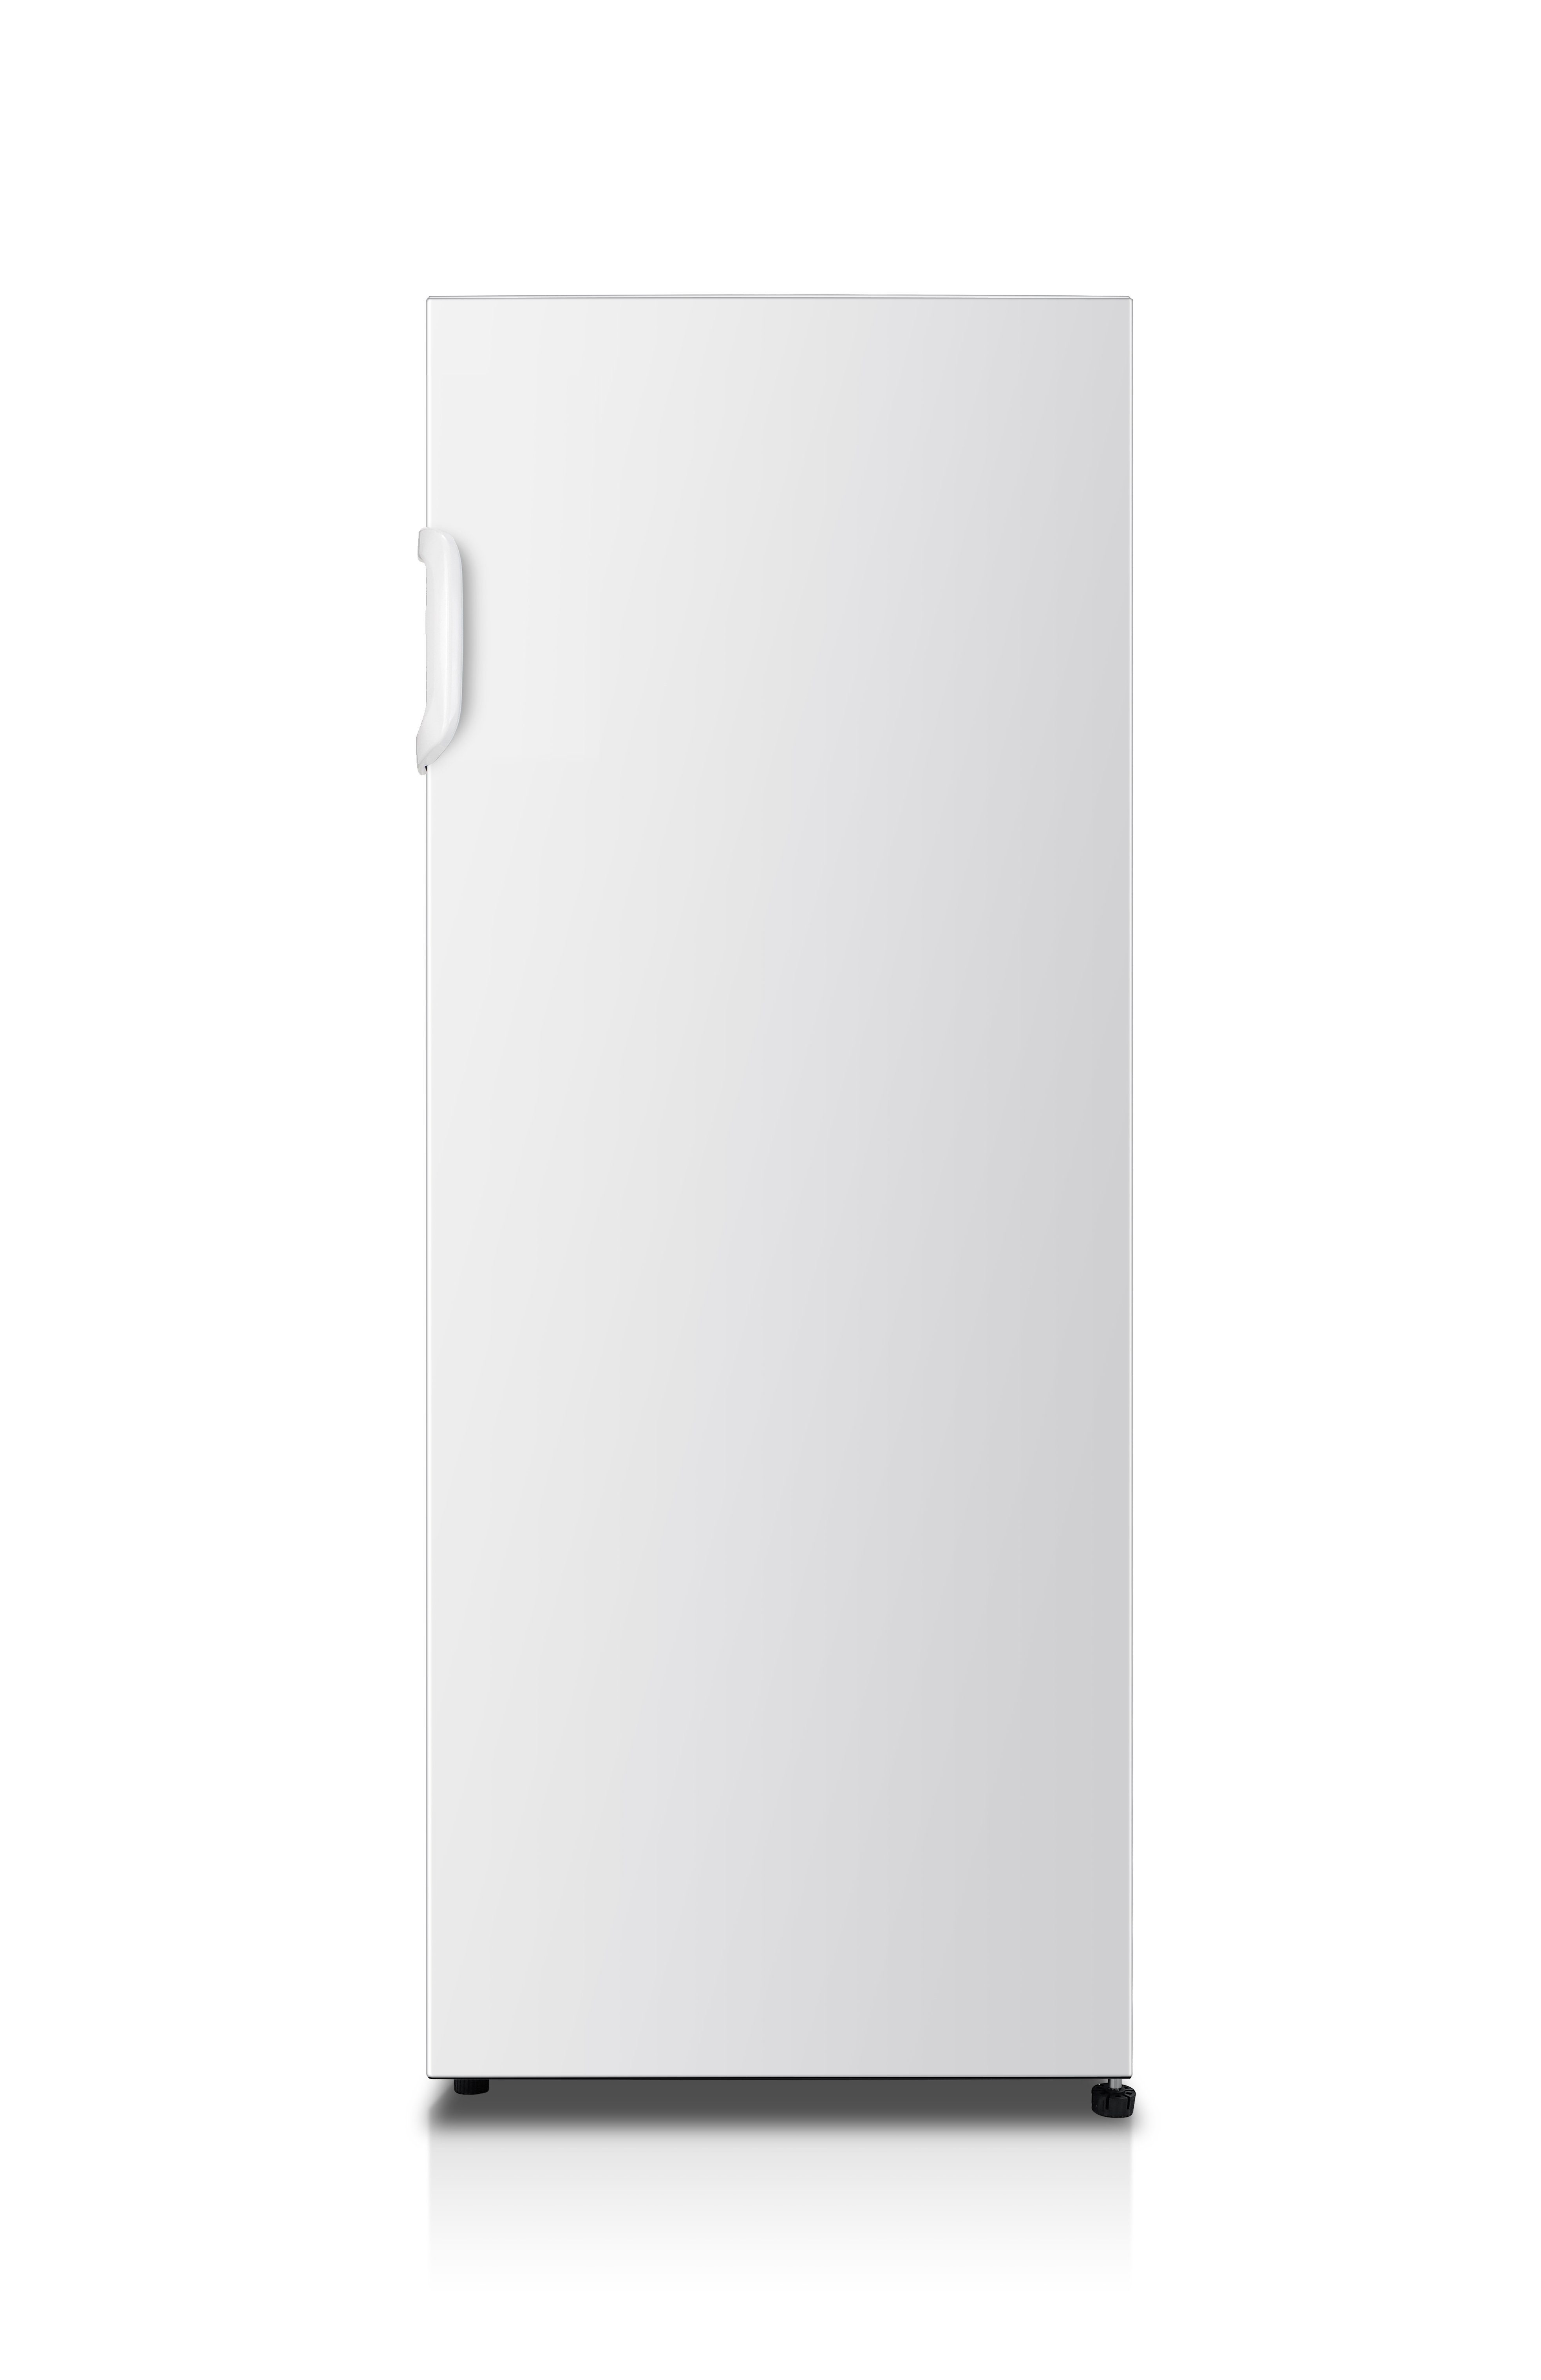 PKM Vollraumkühlschrank KS 242.0A++, 55 cm breit